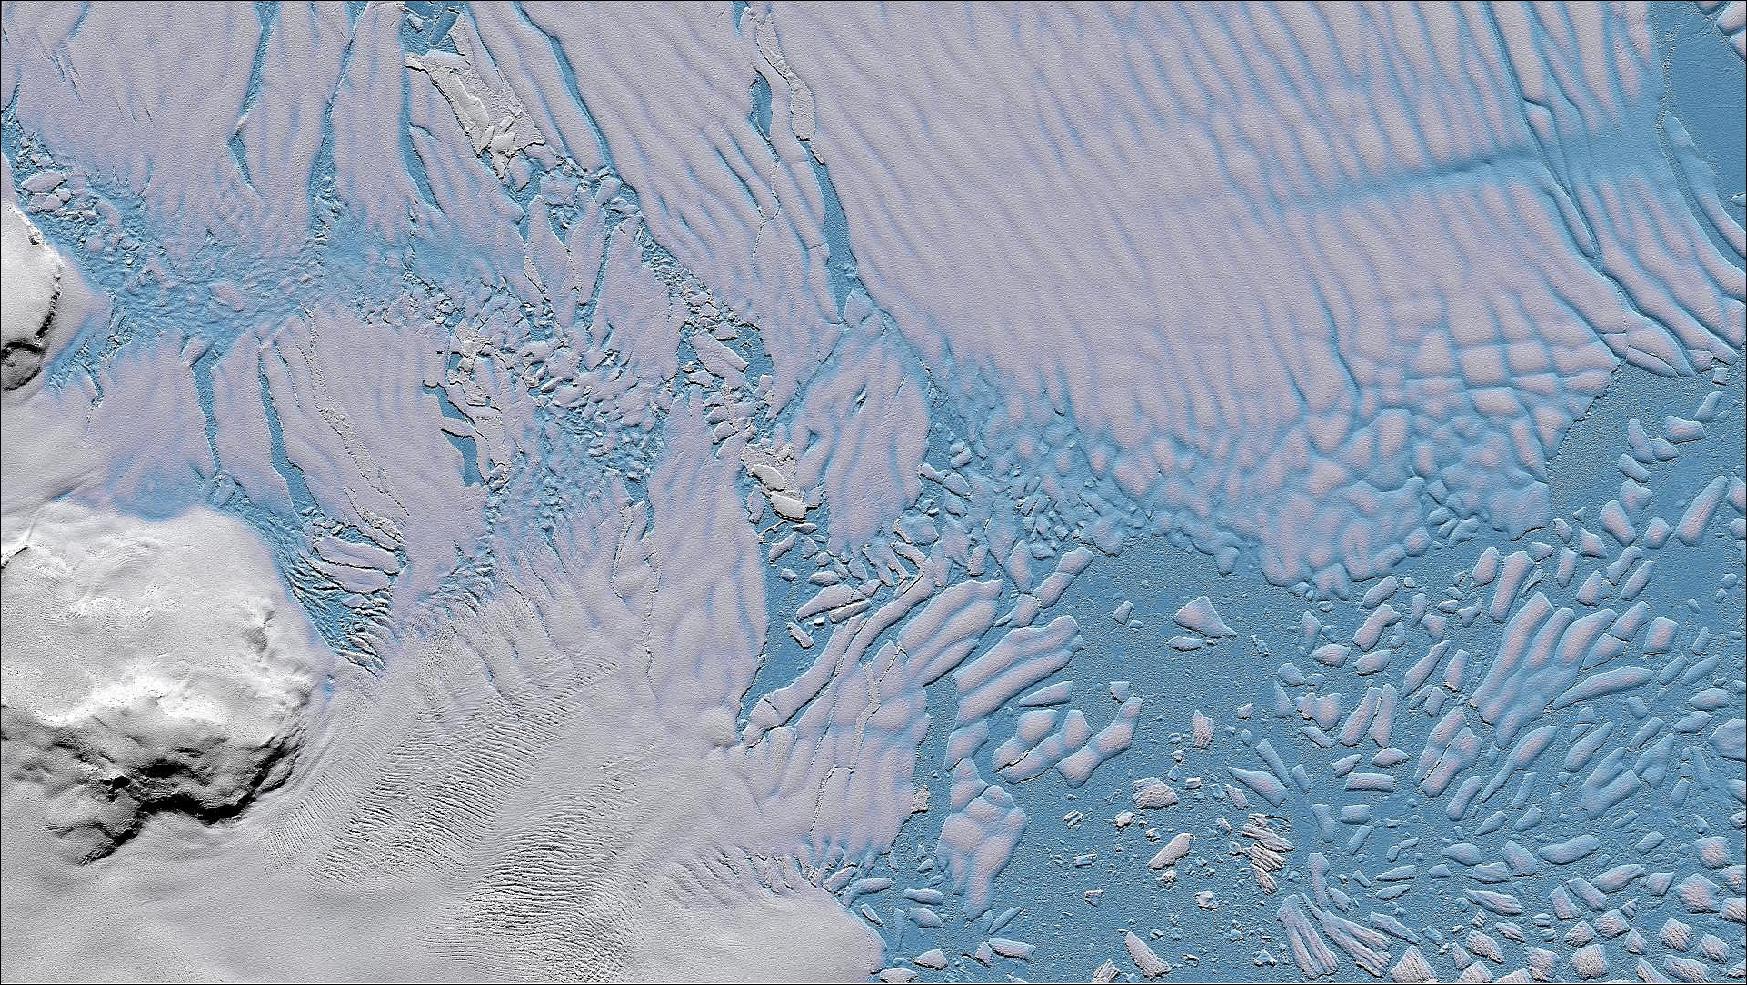 Figure 20: TanDEM-X elevation model -brittle ice shelf of the Thwaites Glacier (image credit: DLR, CC-BY 3.0)